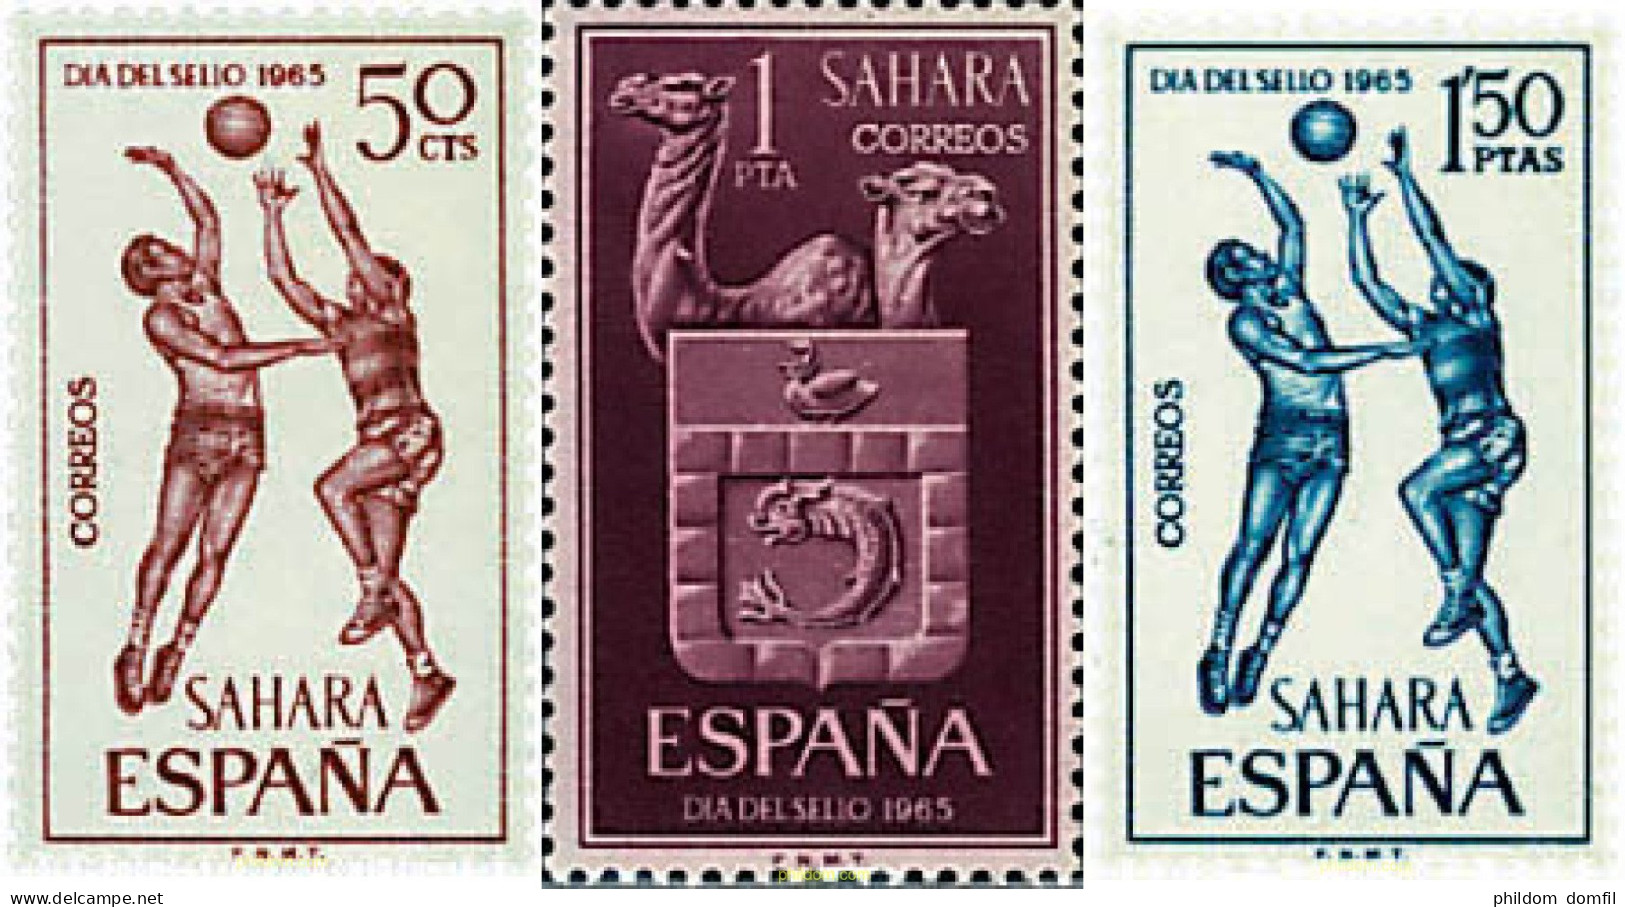 53936 MNH SAHARA ESPAÑOL 1965 DIA DEL SELLO - Spanish Sahara